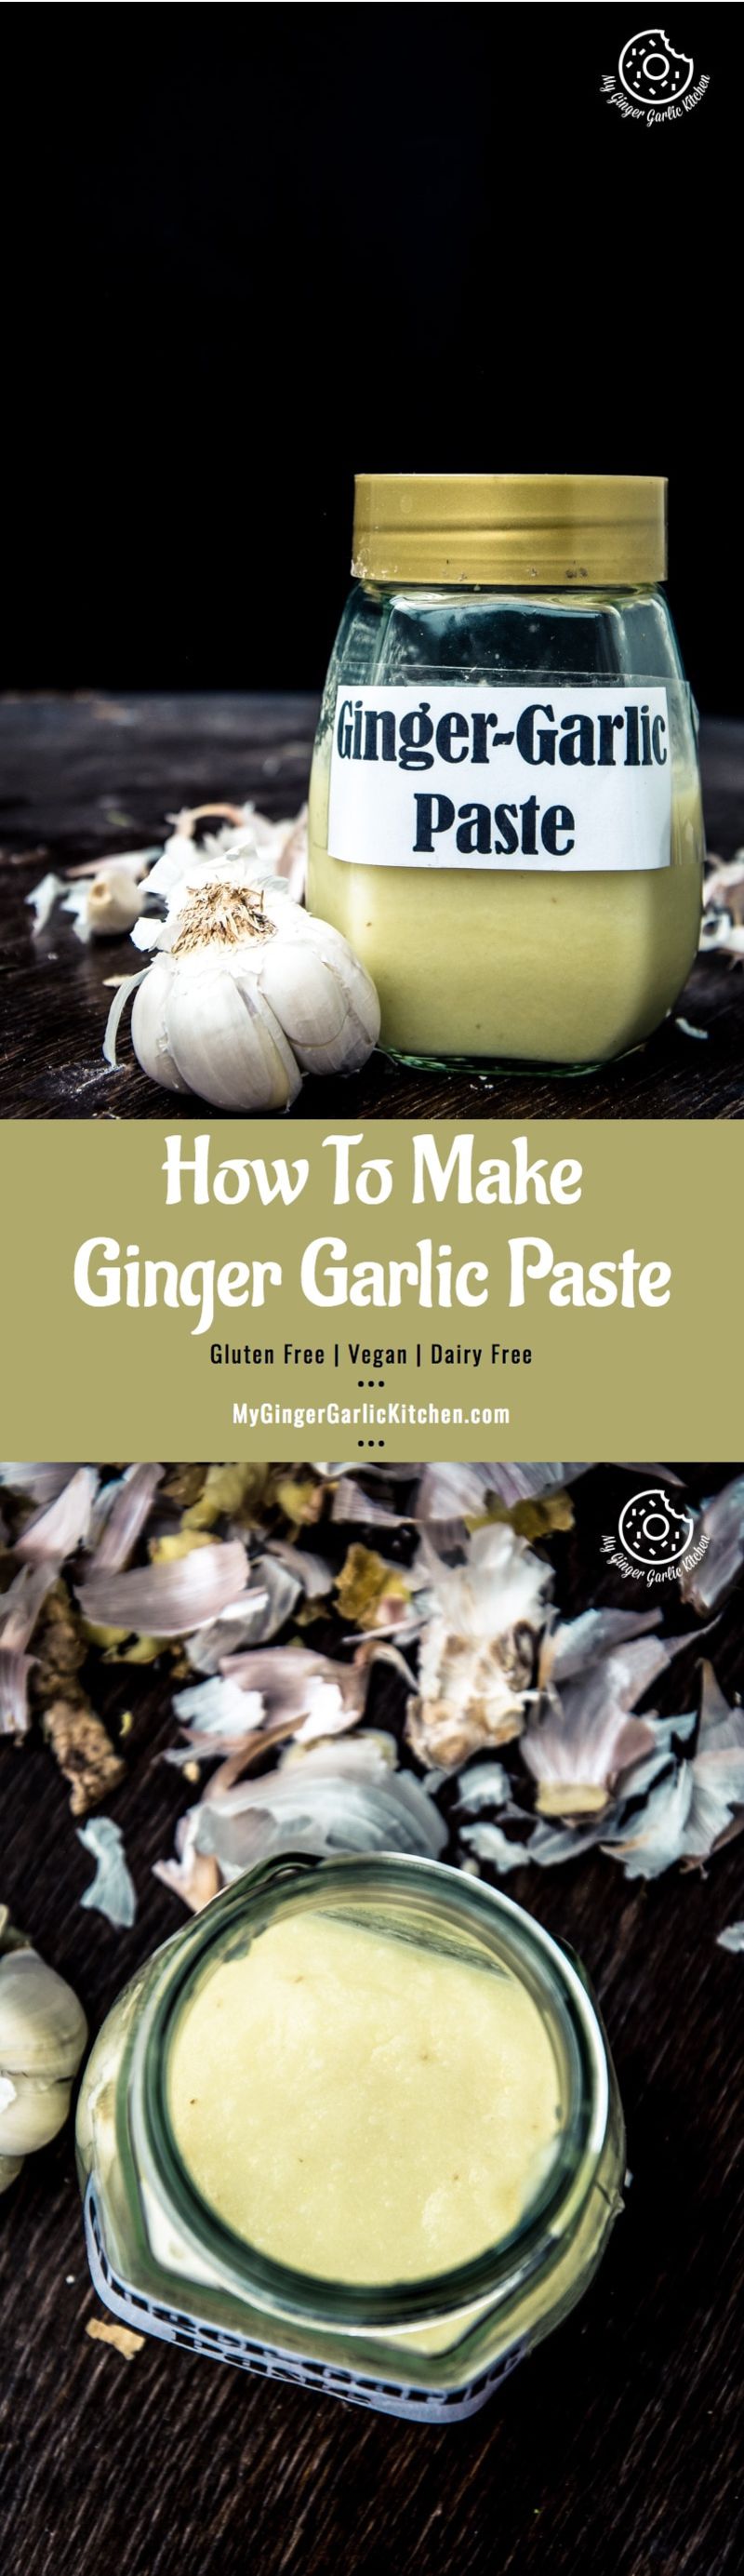 a close up of a jar of ginger garlic paste next to garlic